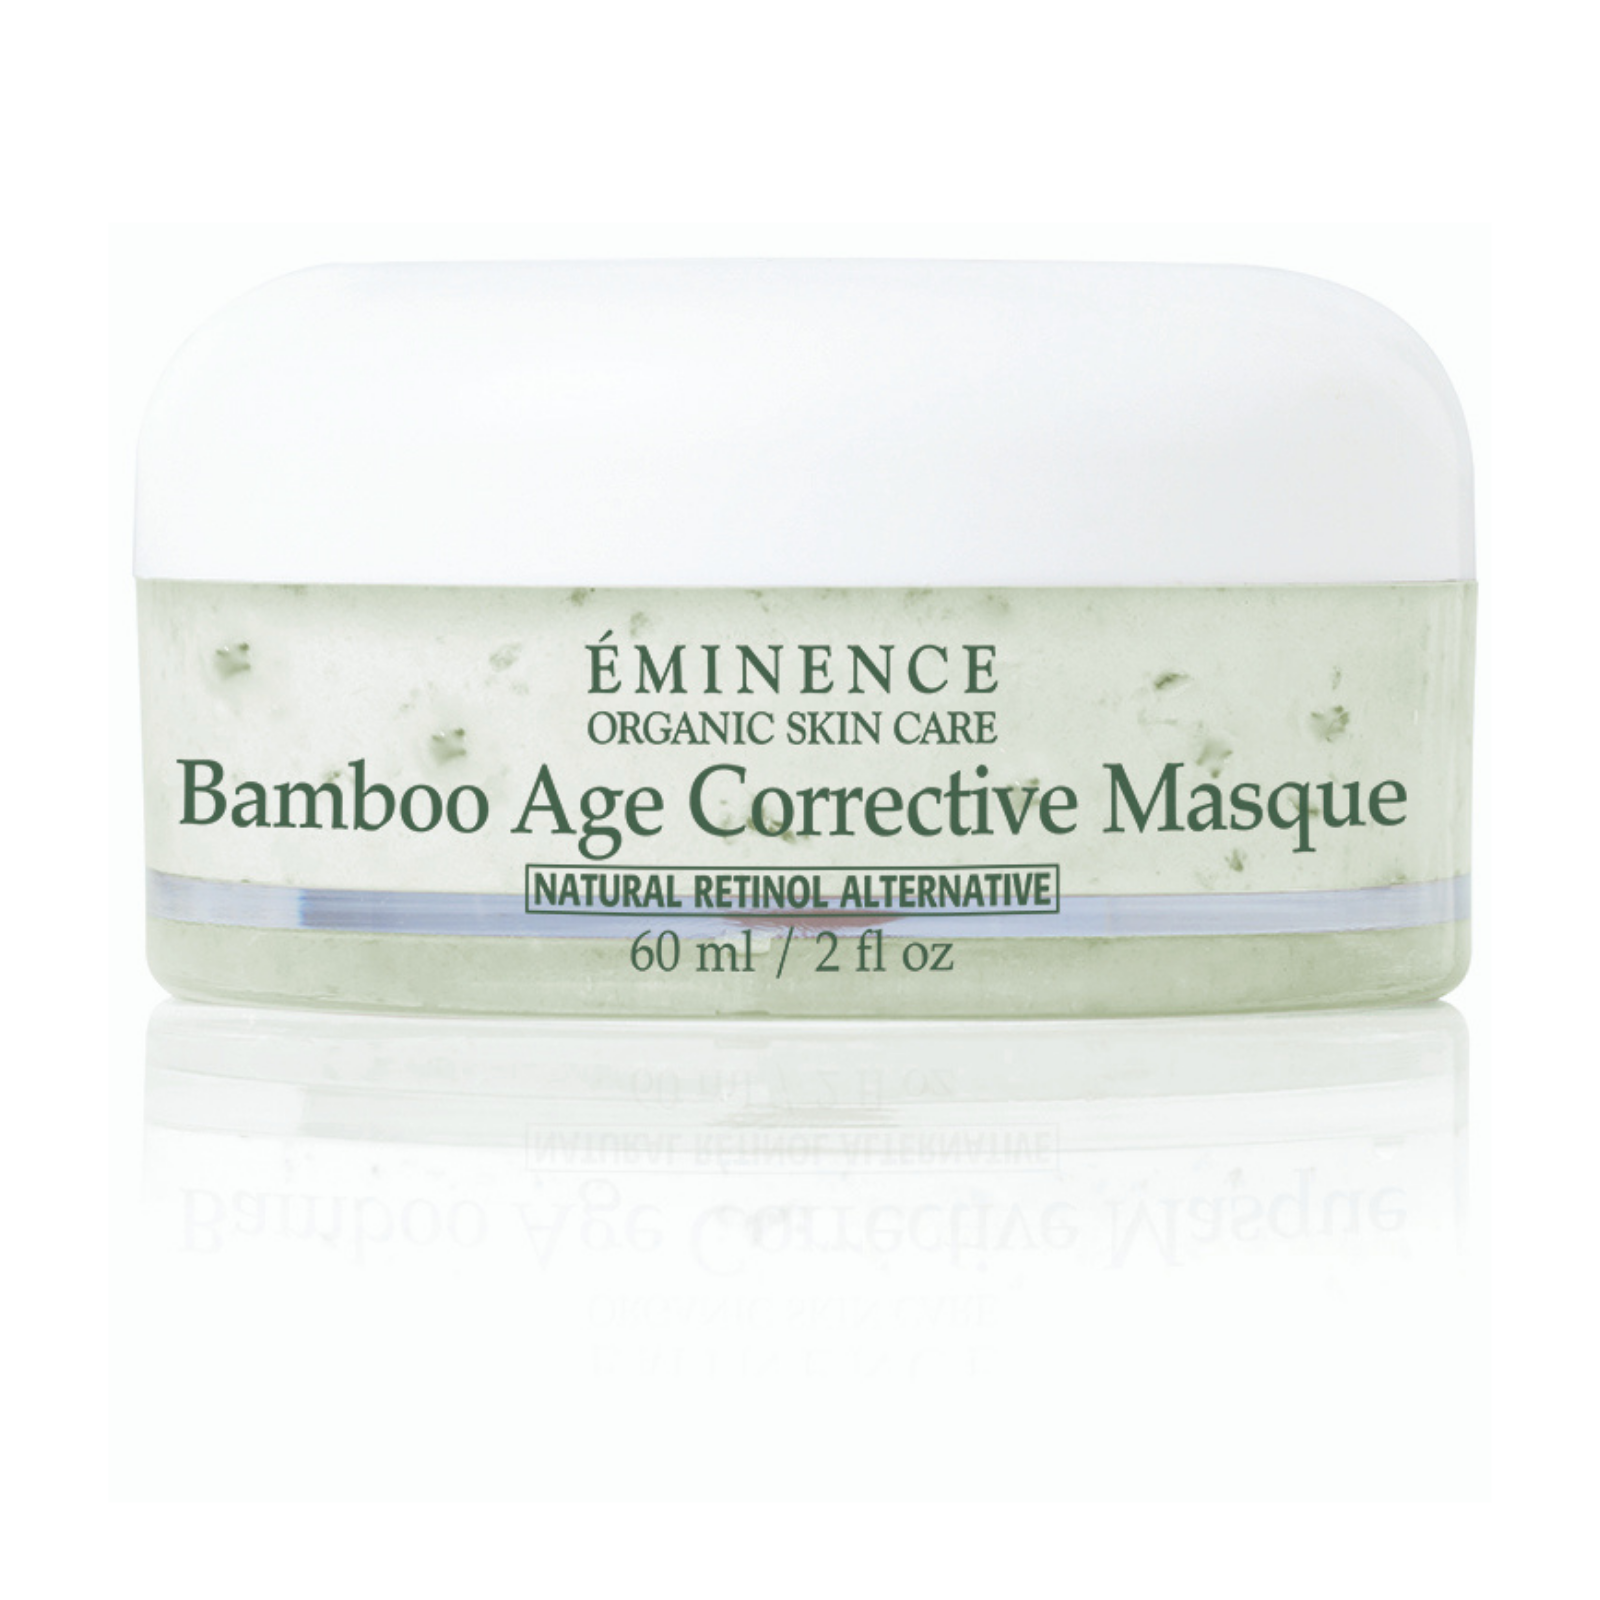 Eminence Bamboo Age Corrective Masque 60ml